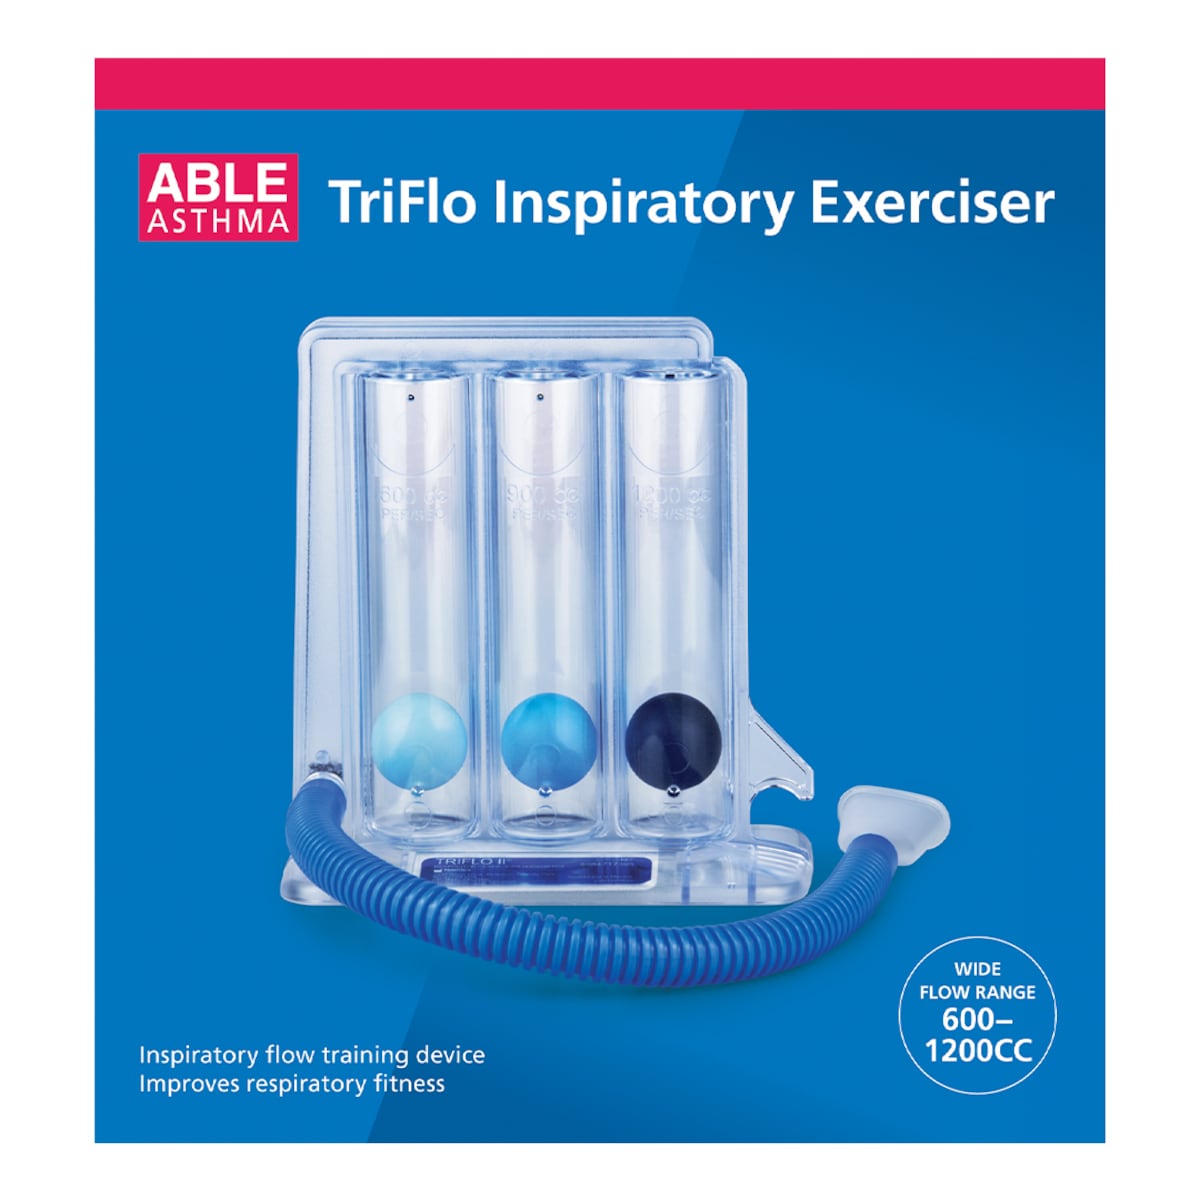 ABLE TriFlo Inspiratory Exerciser